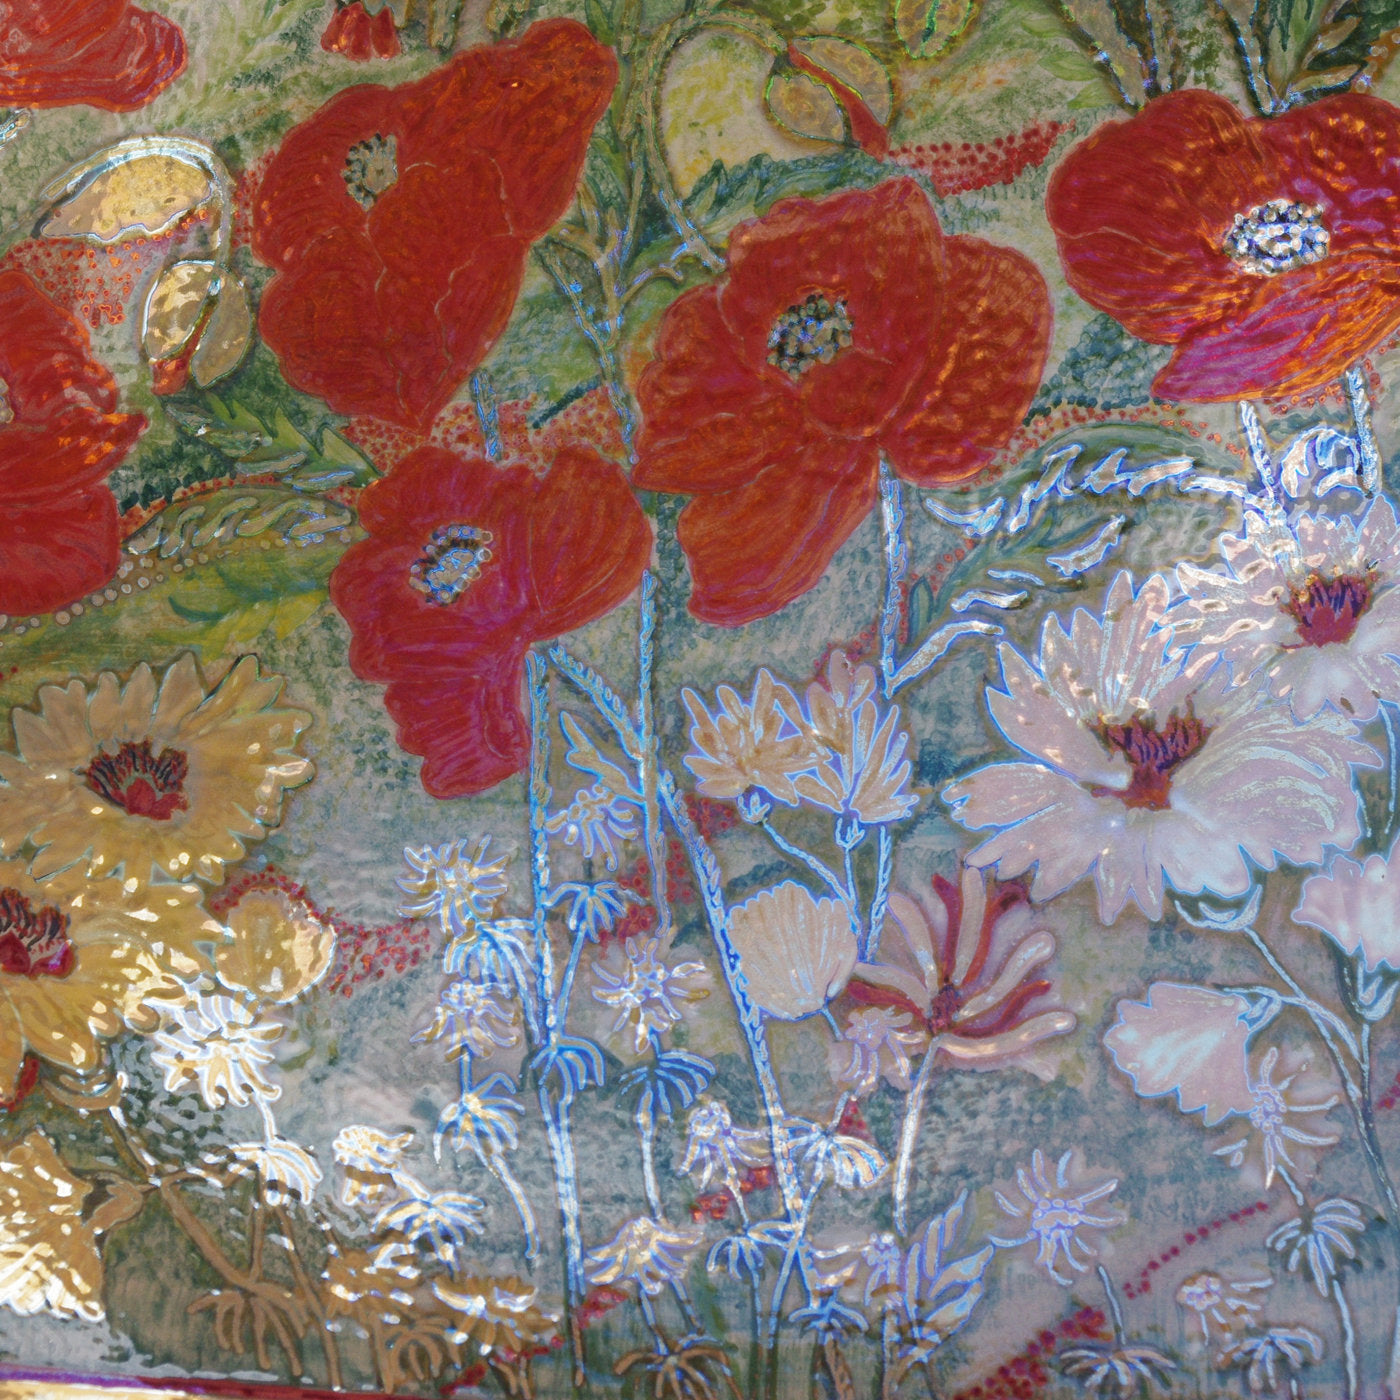 Poppies Decorative Plate - Alternative view 4